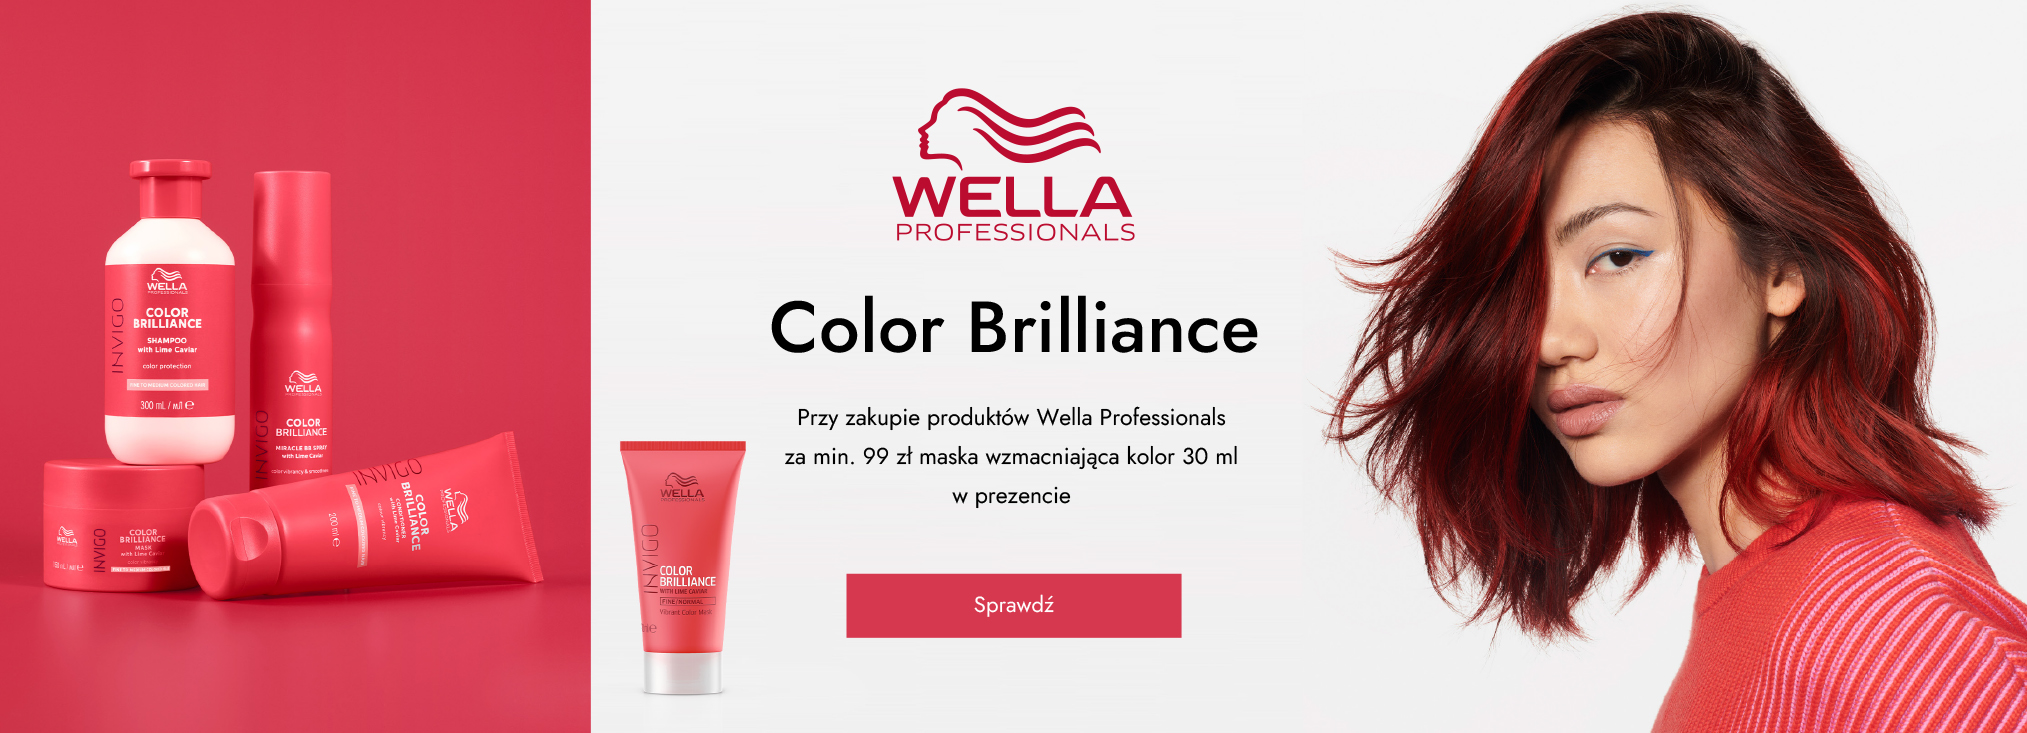 Wella ProfessionalsWella Professionals_hair